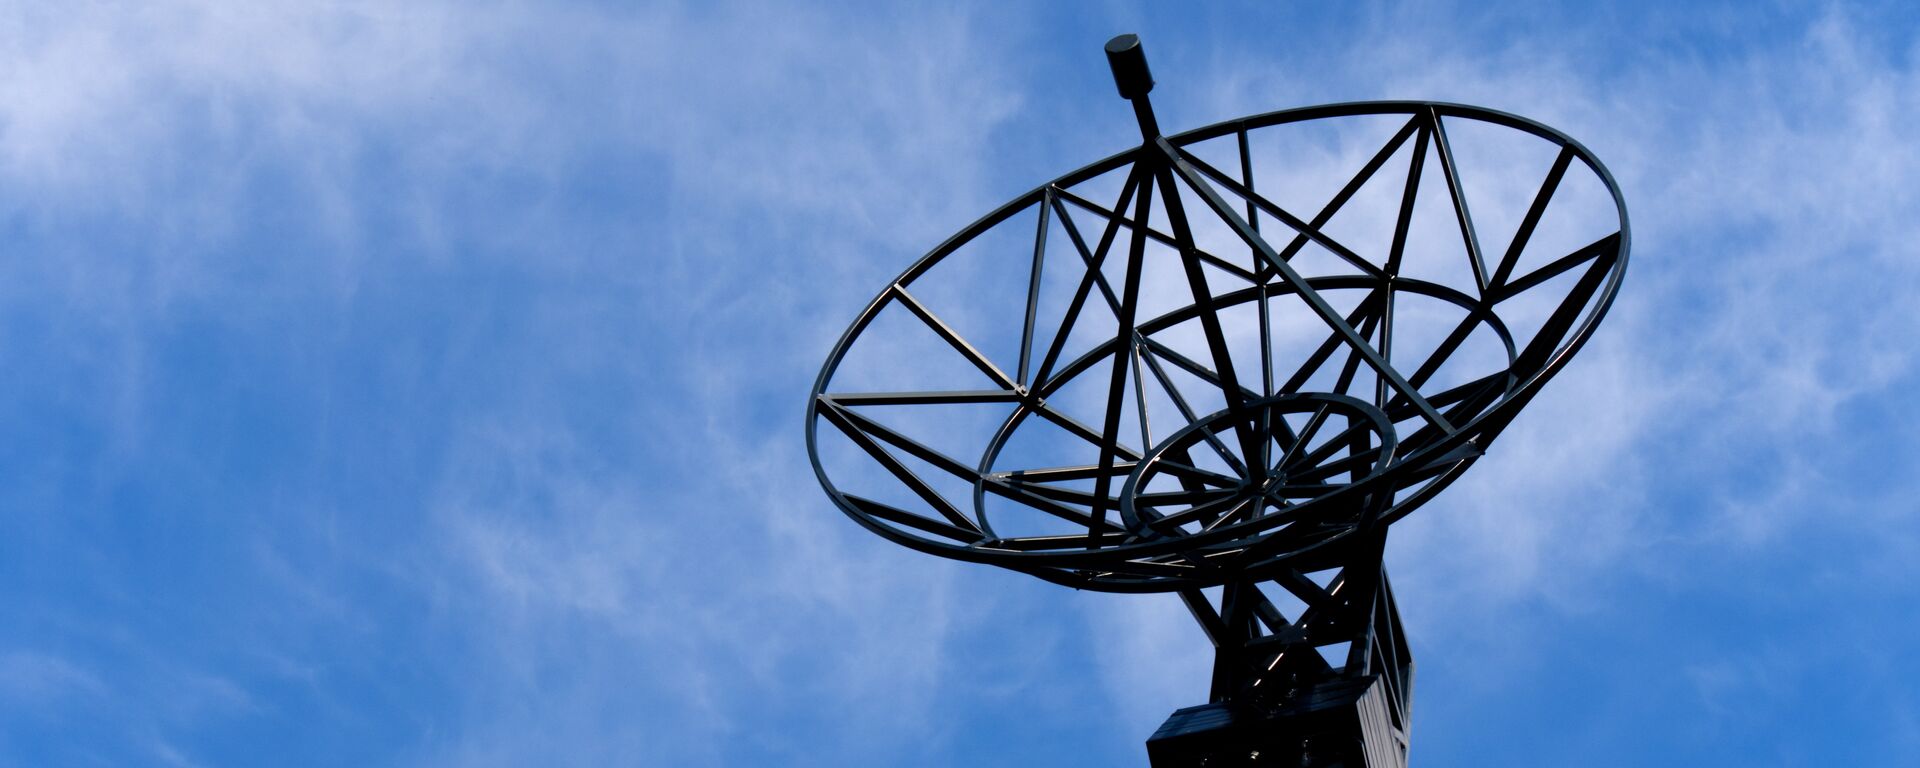 Un radar (imagen referencial) - Sputnik Mundo, 1920, 08.11.2021